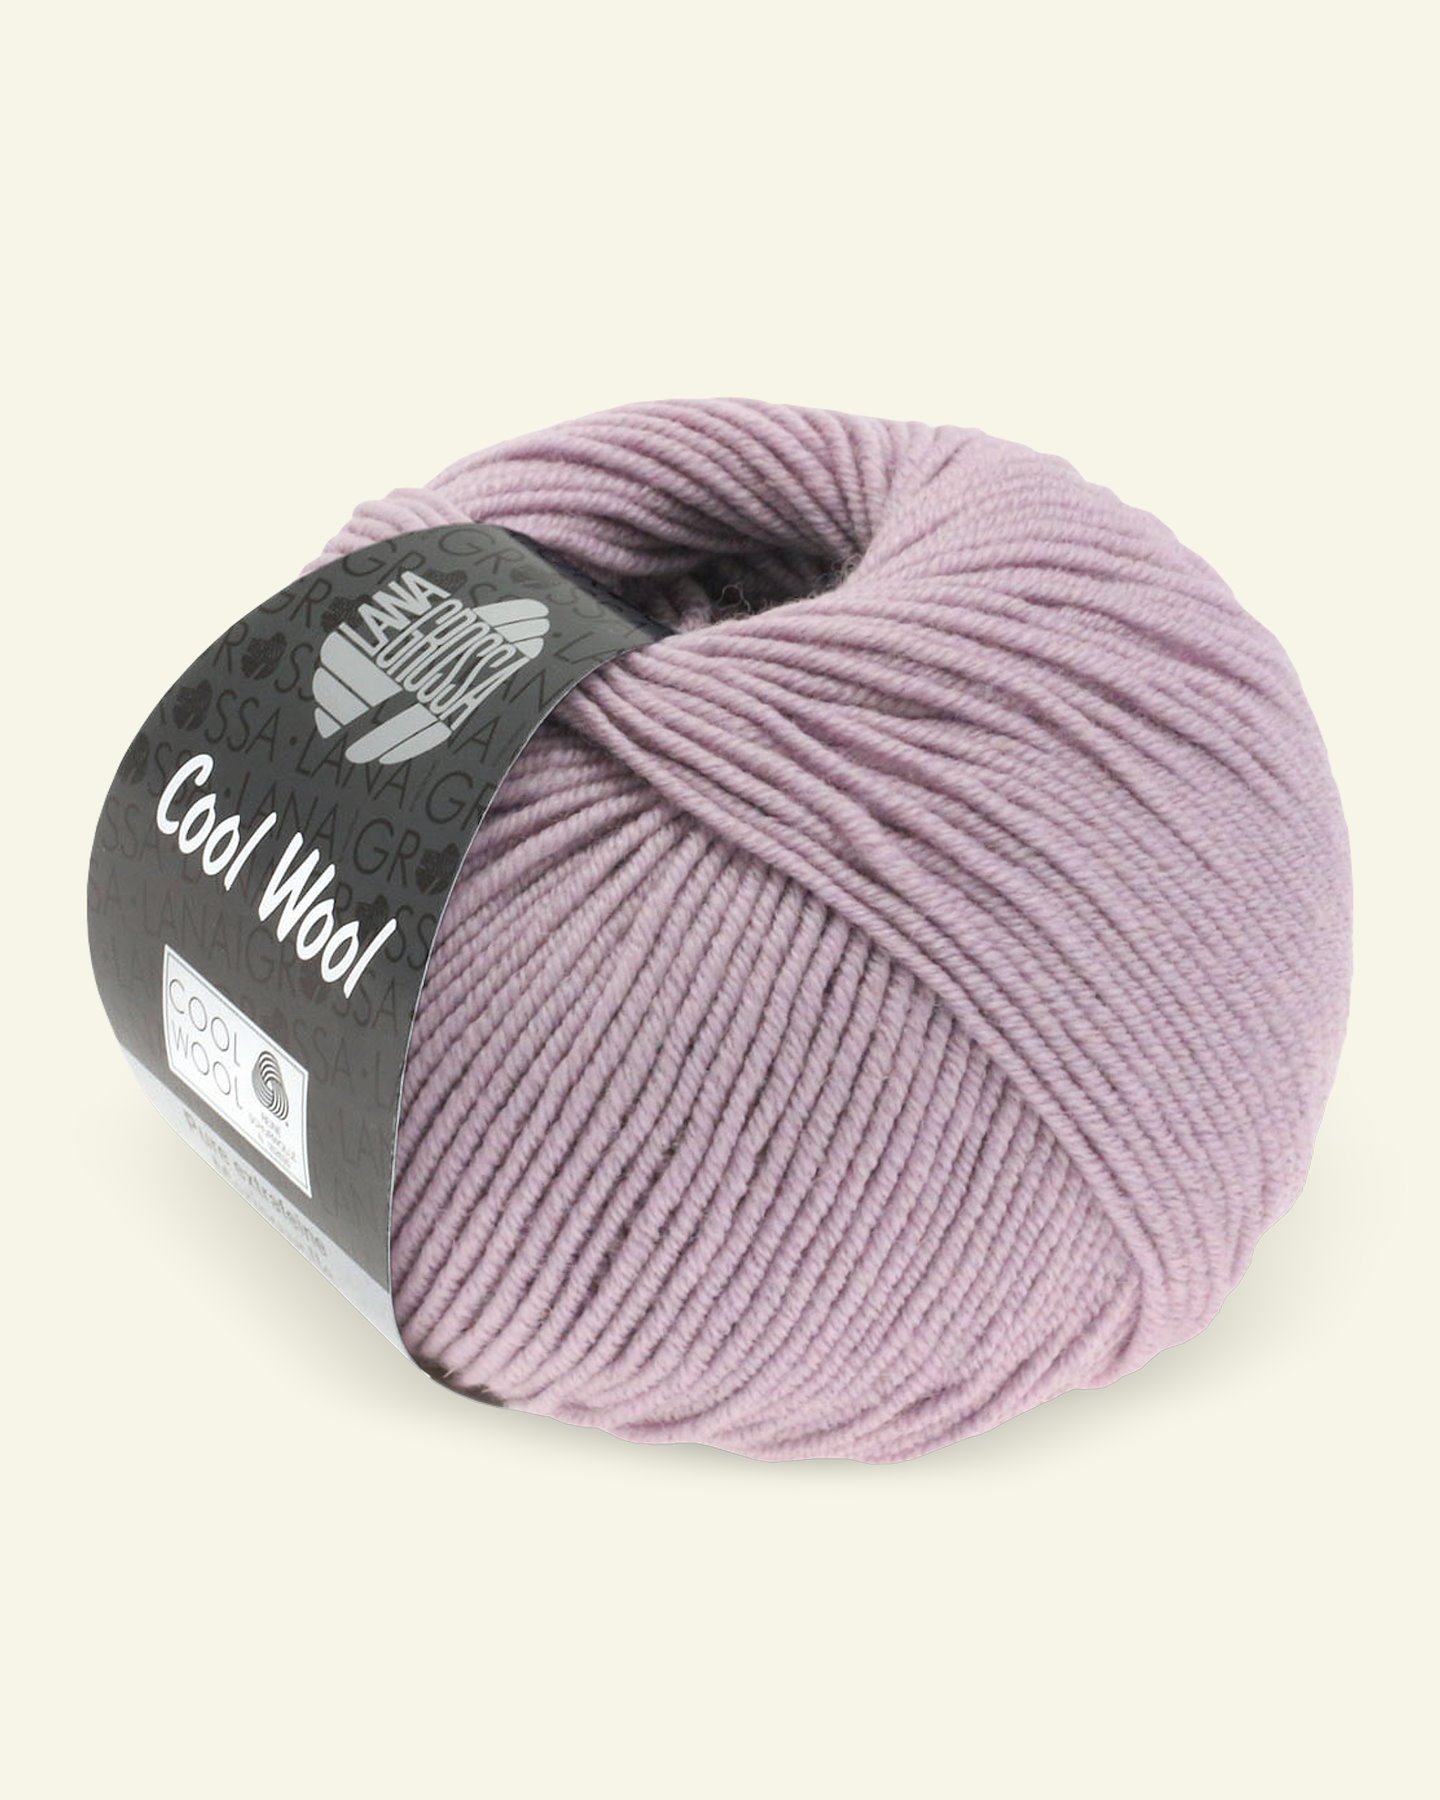 Lana Grossa, extrafine merino wool yarn "Cool Wool", dusty rose 90001120_pack